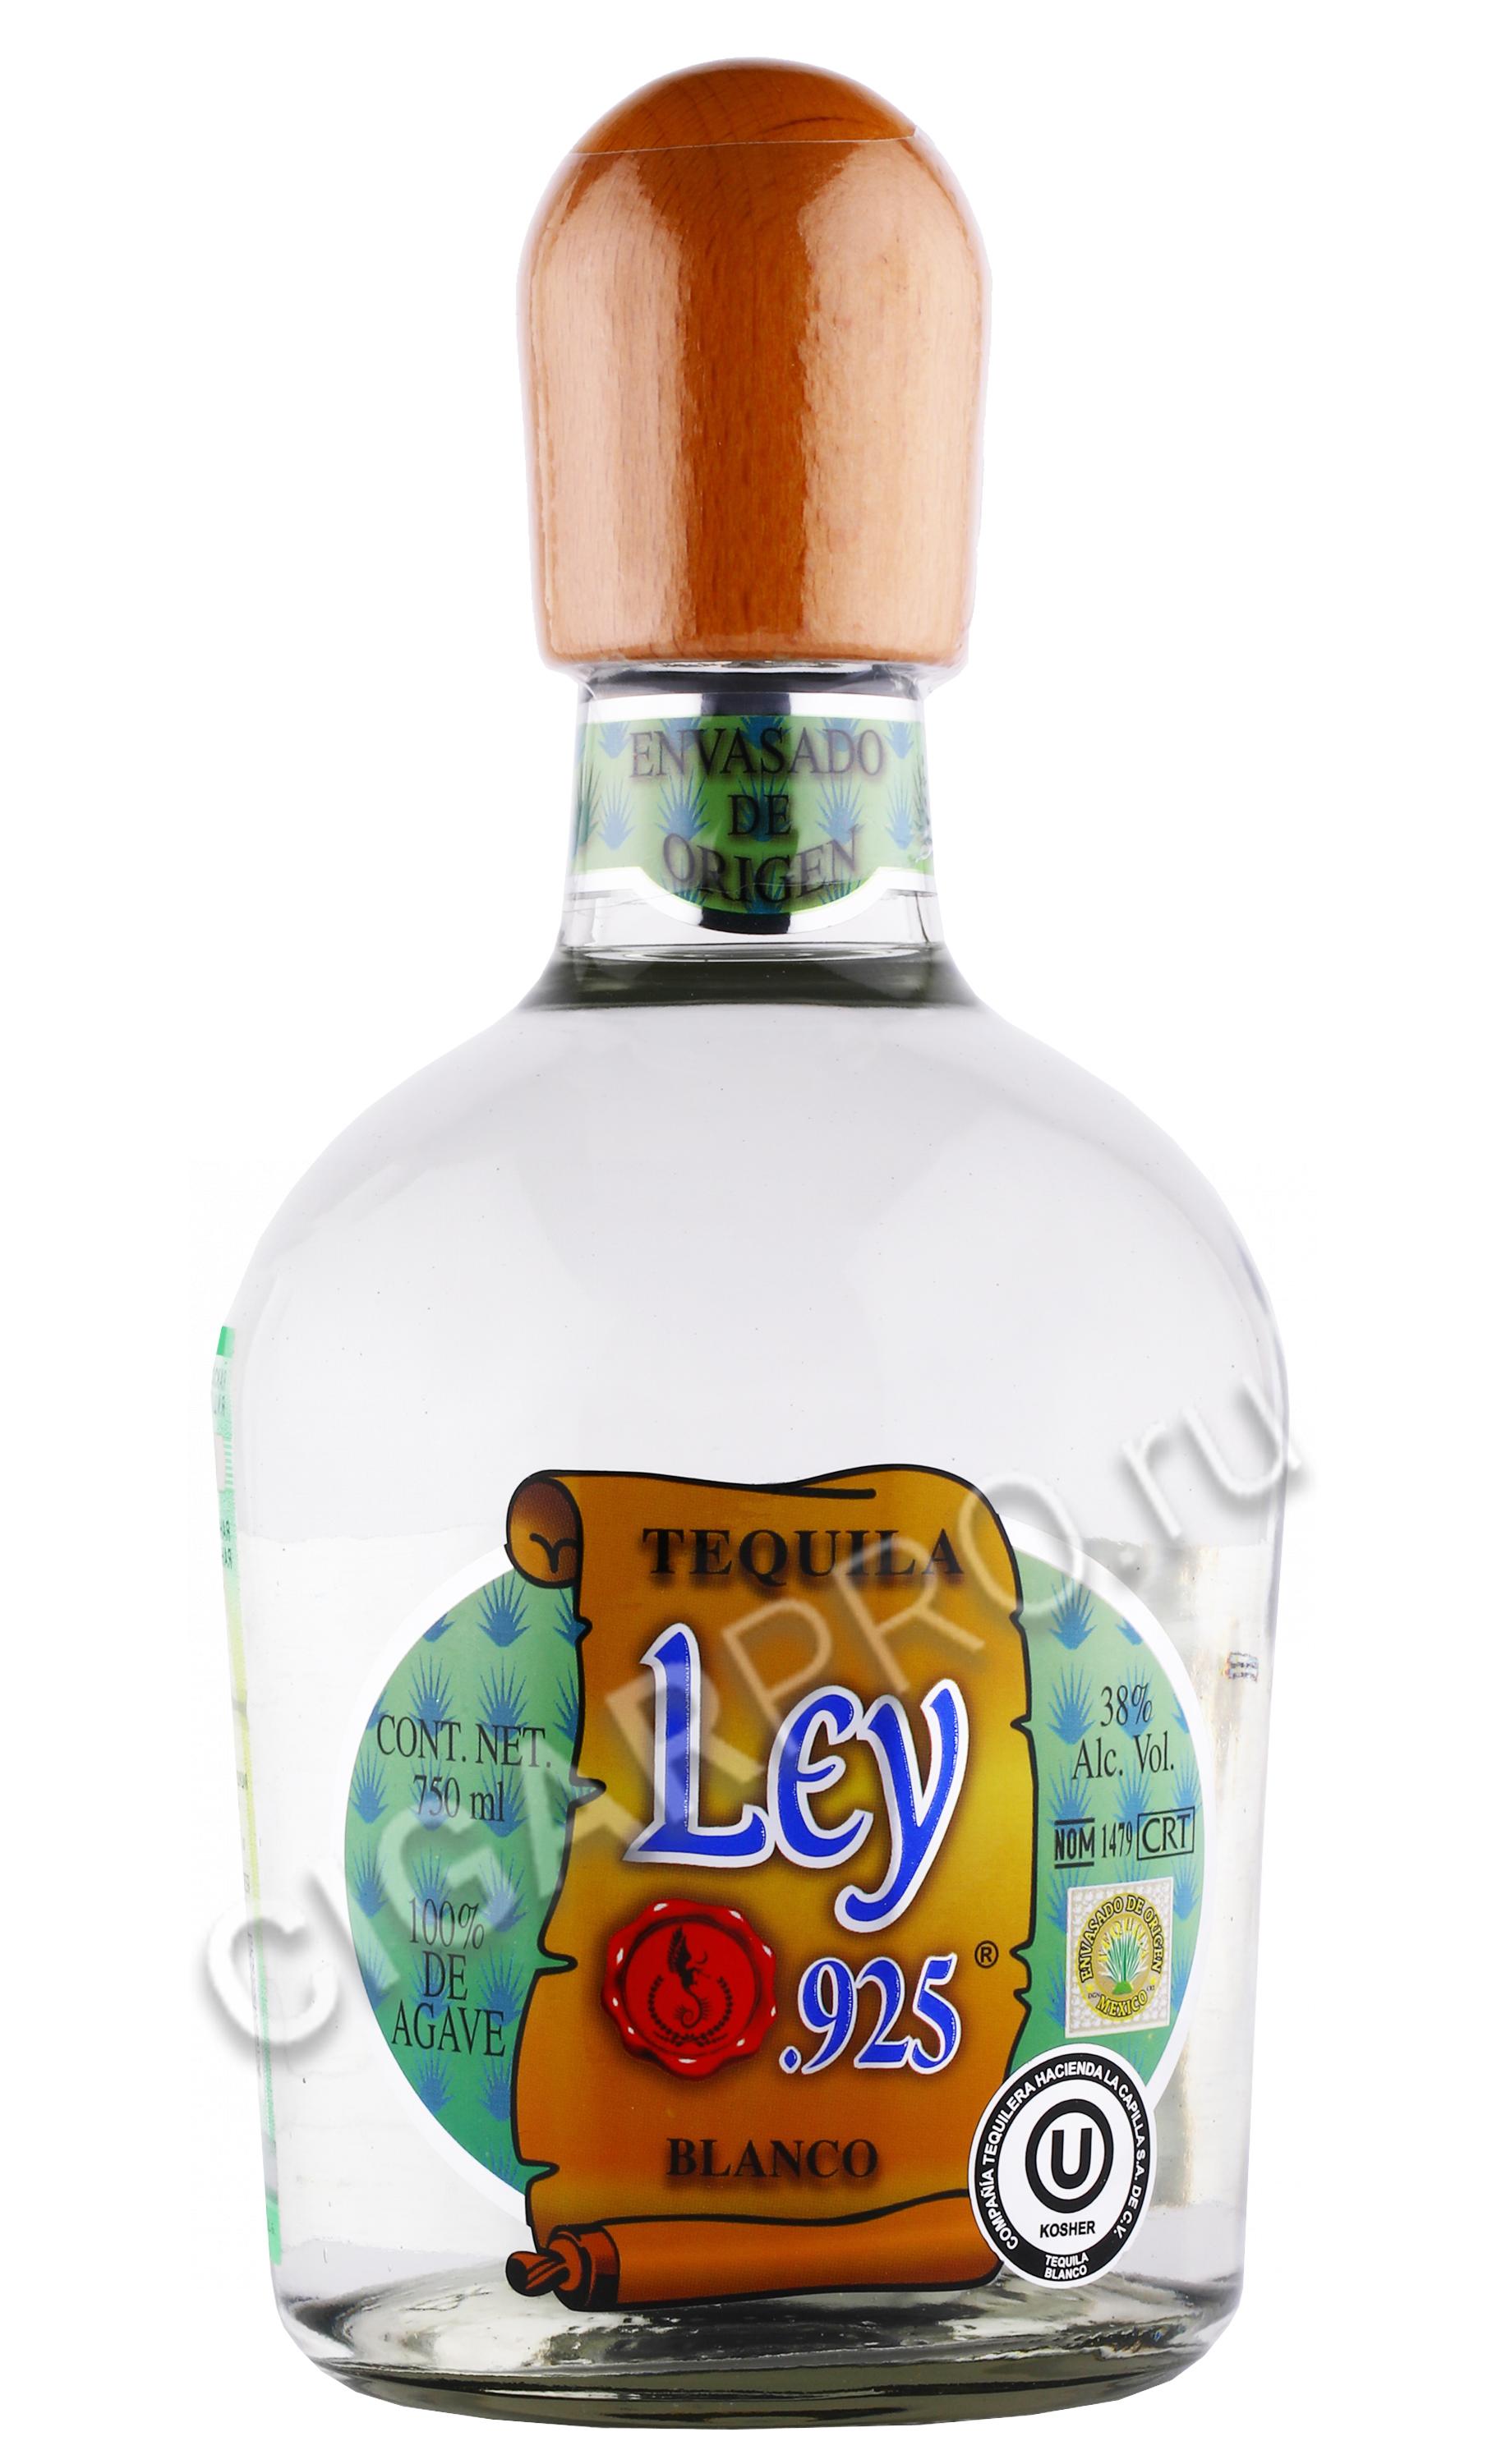 Tequila Ley 925 Blanco купить Текилу Лей 925 Бланко 0.75л цена